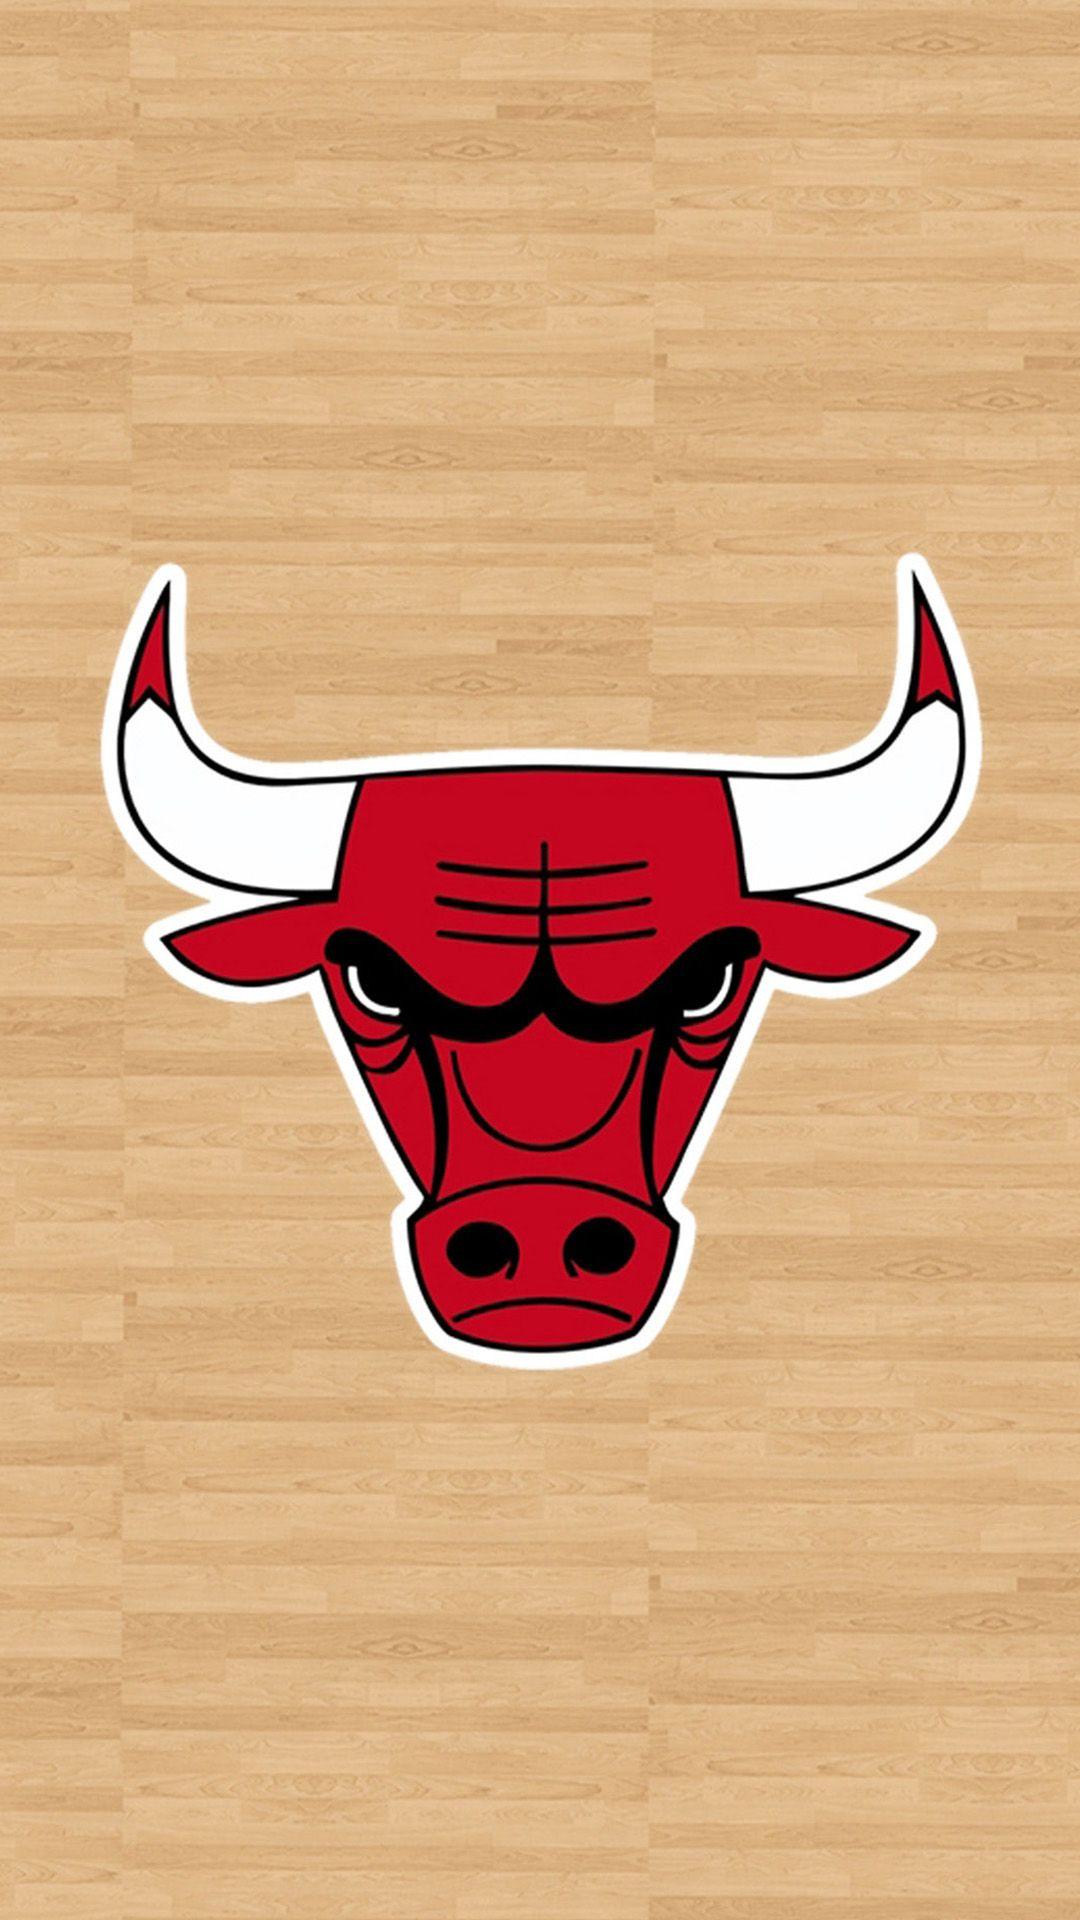 Wallpaper ID 429307  Sports Chicago Bulls Phone Wallpaper NBA Logo  Basketball 750x1334 free download